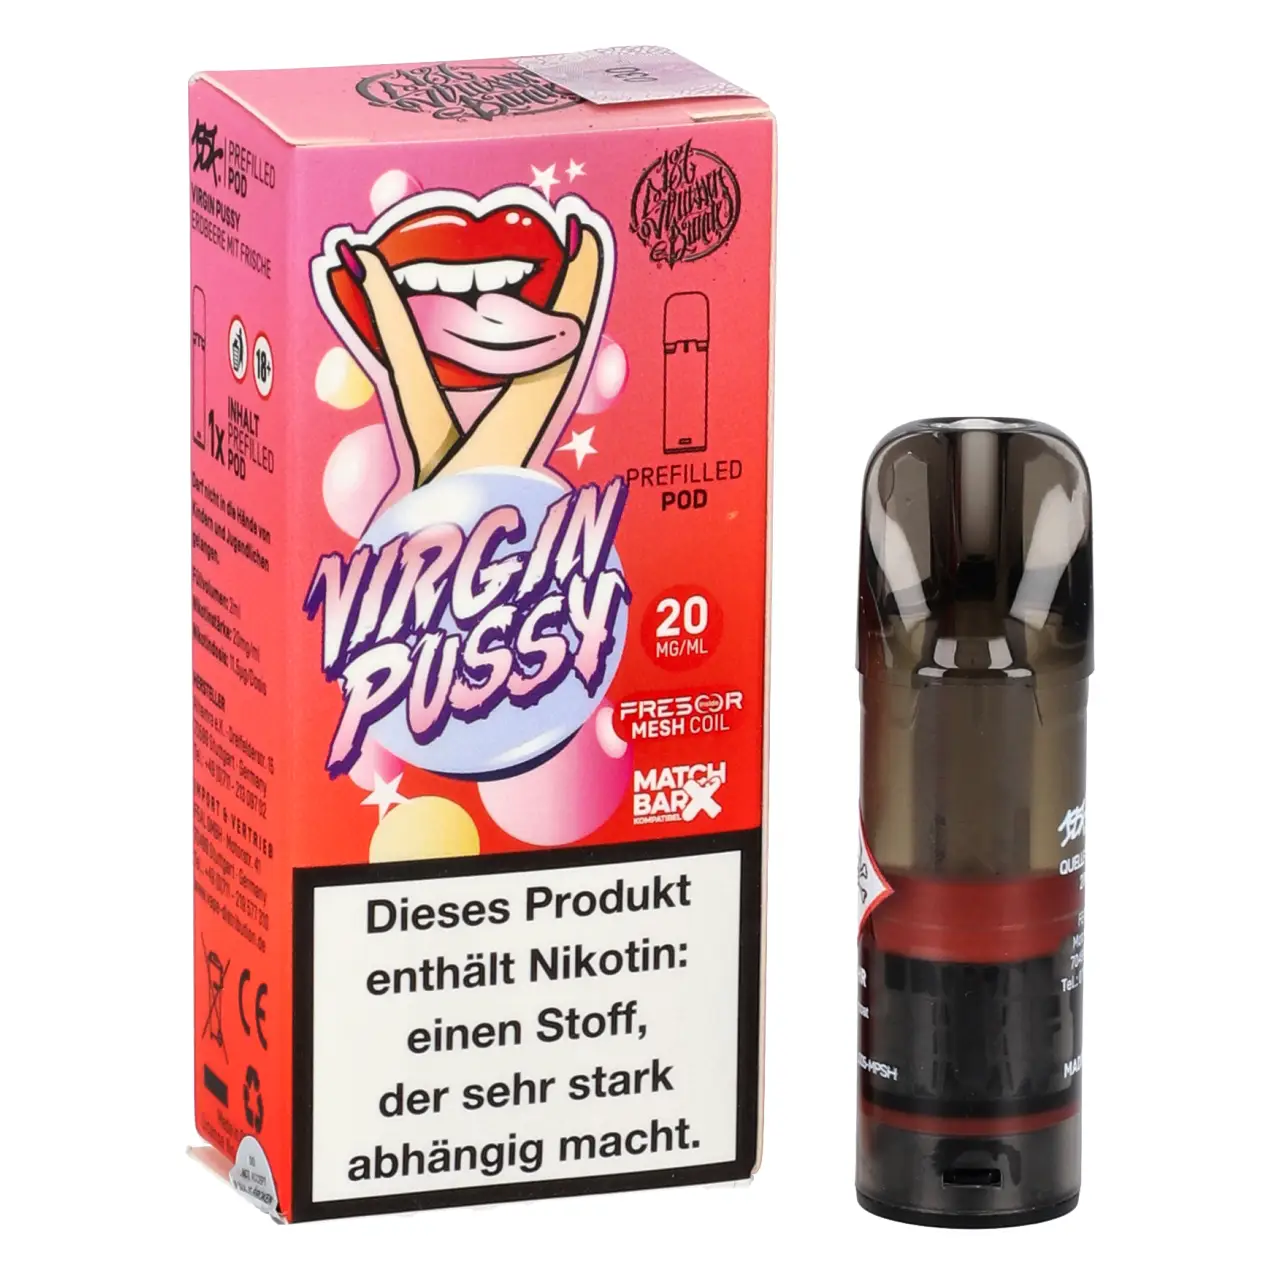 Virgin Pussy - 187 Strassenbande Prefilled Pod für Mehrweg Vape - befüllt mit 2ml Liquid - MatchBar X kompatibel